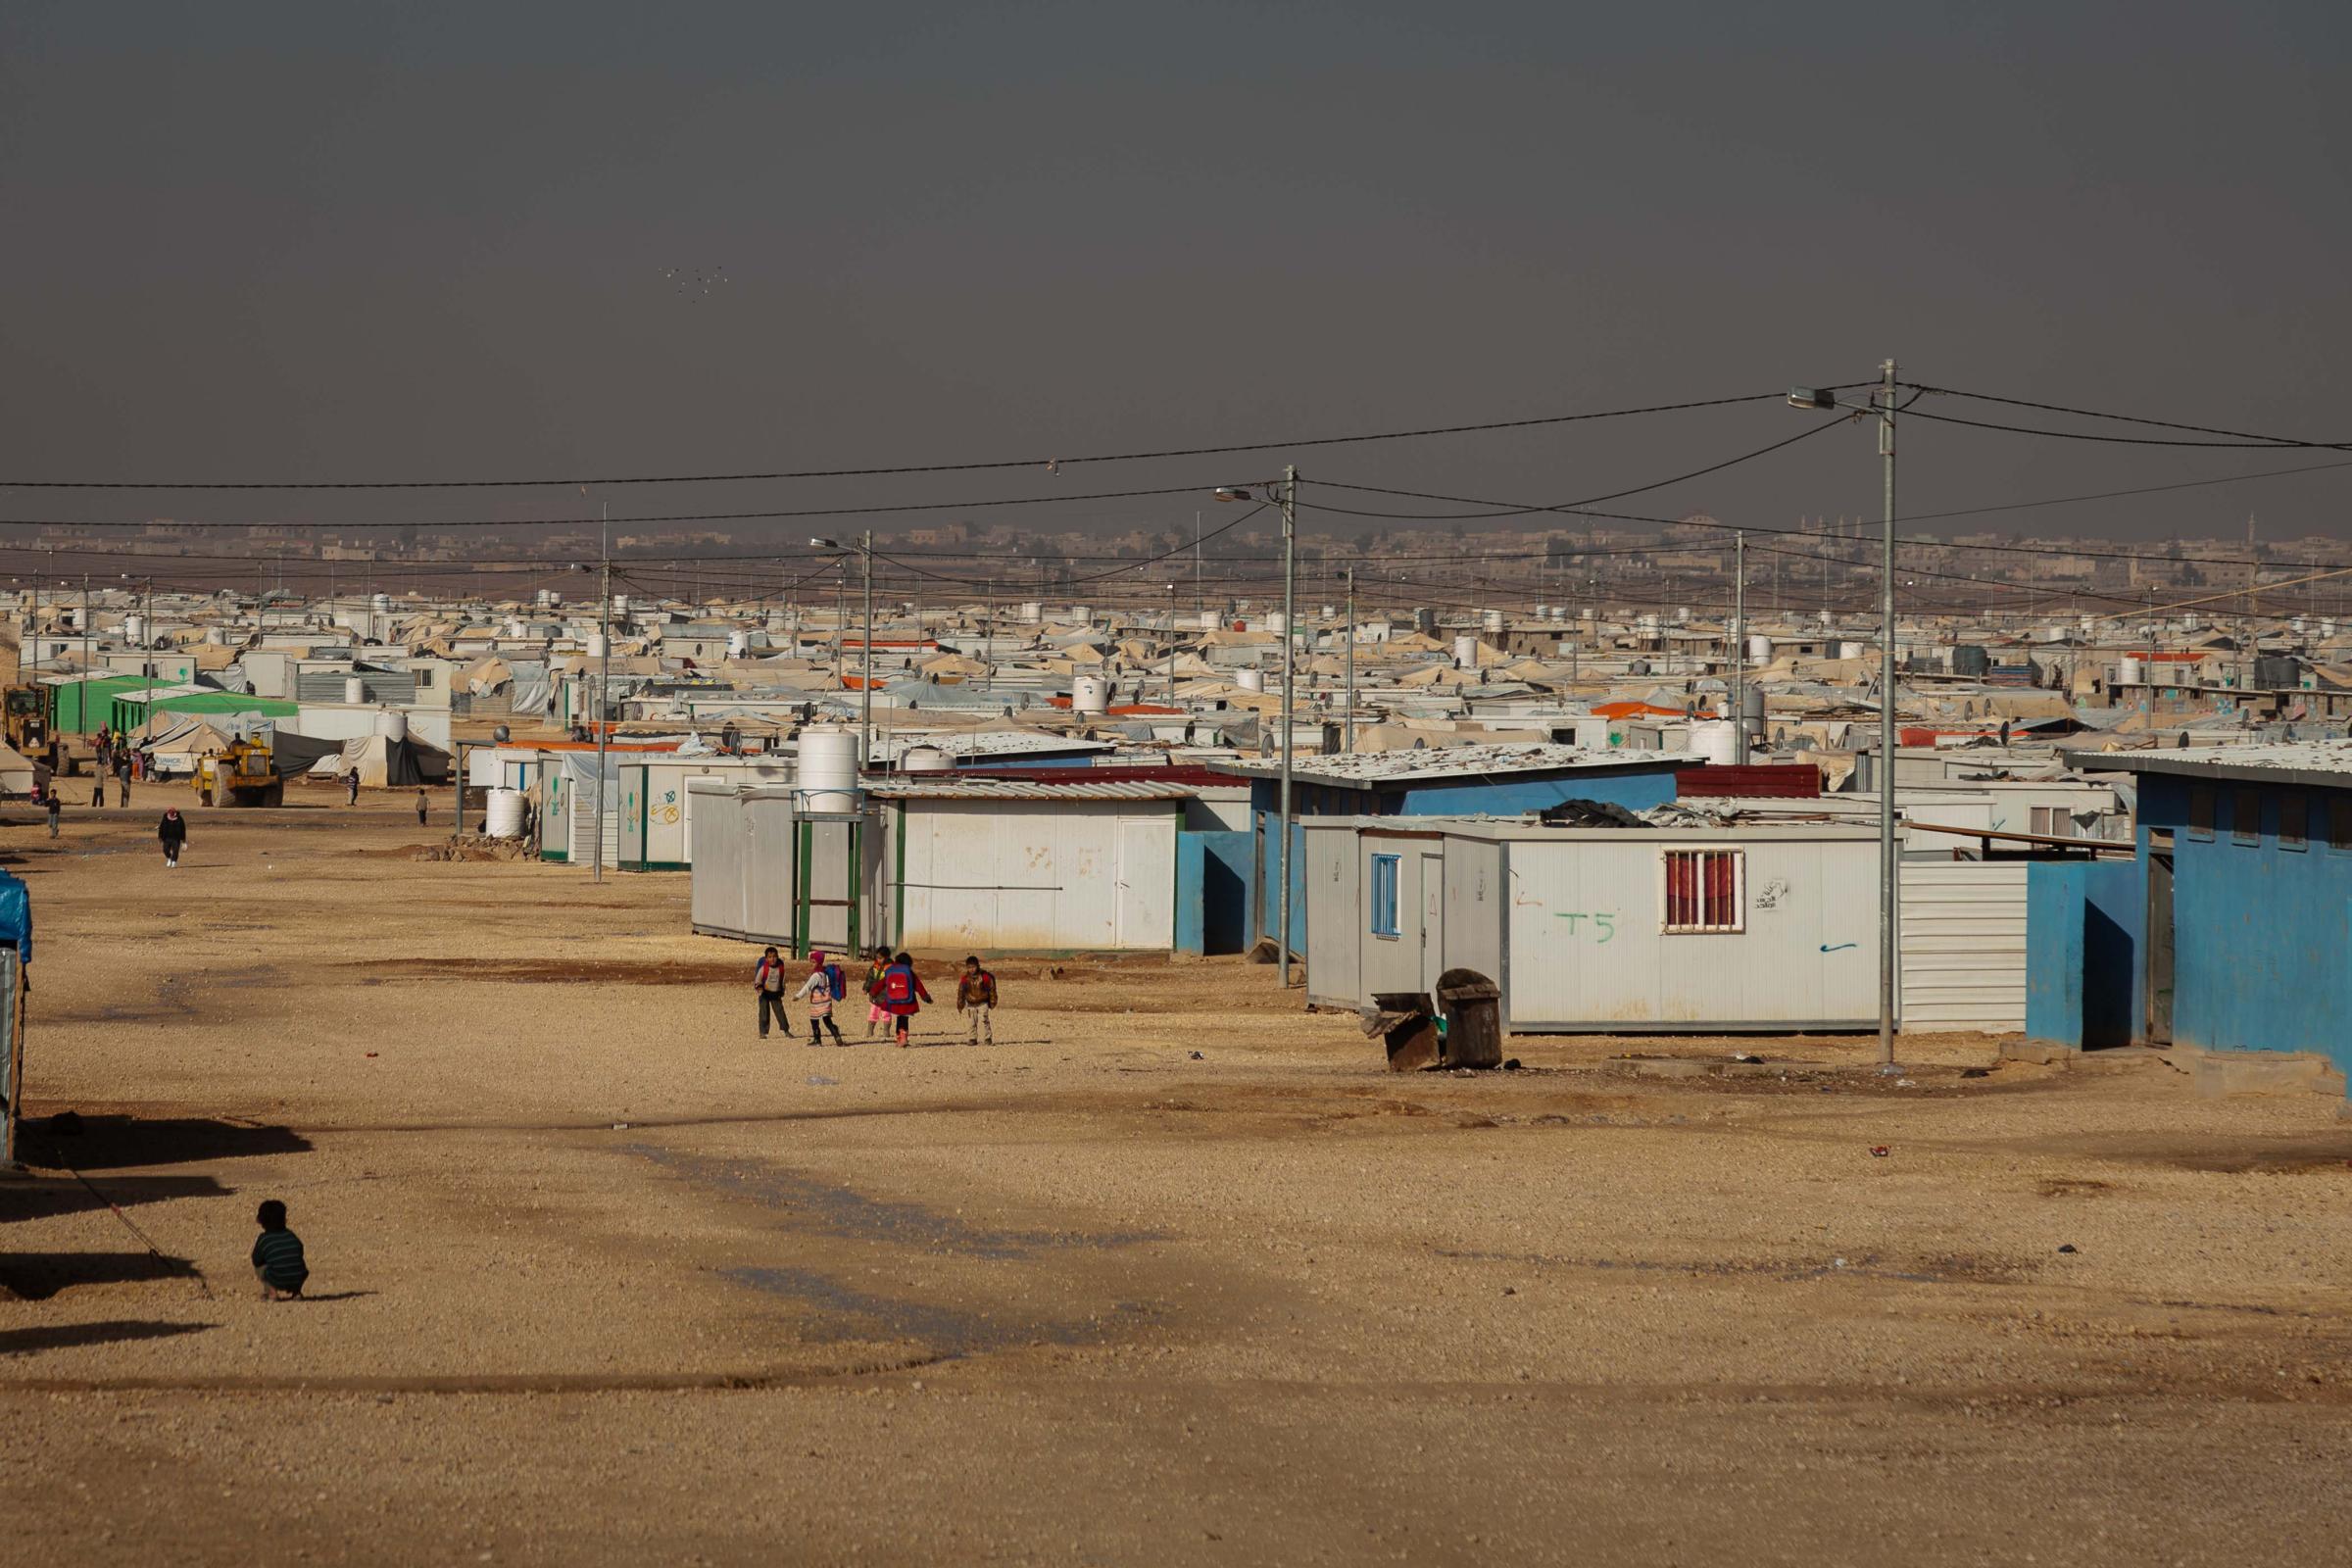 Zaatari. Jordan. November 2014. More than 80,000 refugees live in Zaatari , located in a desert region of northern Jordan where the temperatures...